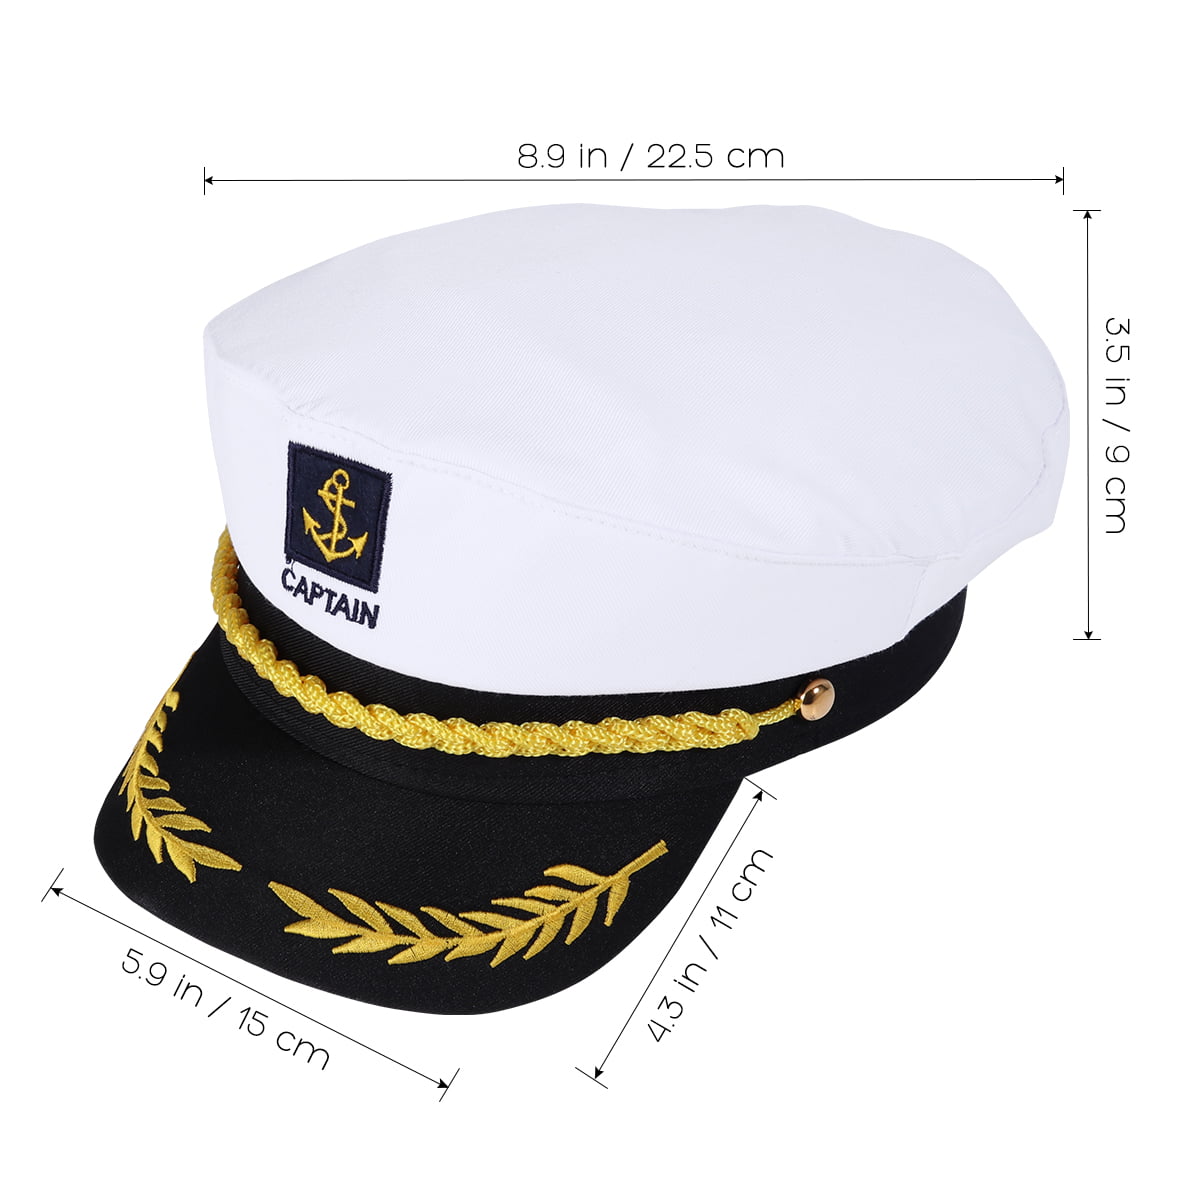 ADULT YACHT BOAT SHIP SAILOR CAPTAIN COSTUME HAT CAP NAVY MARINE 